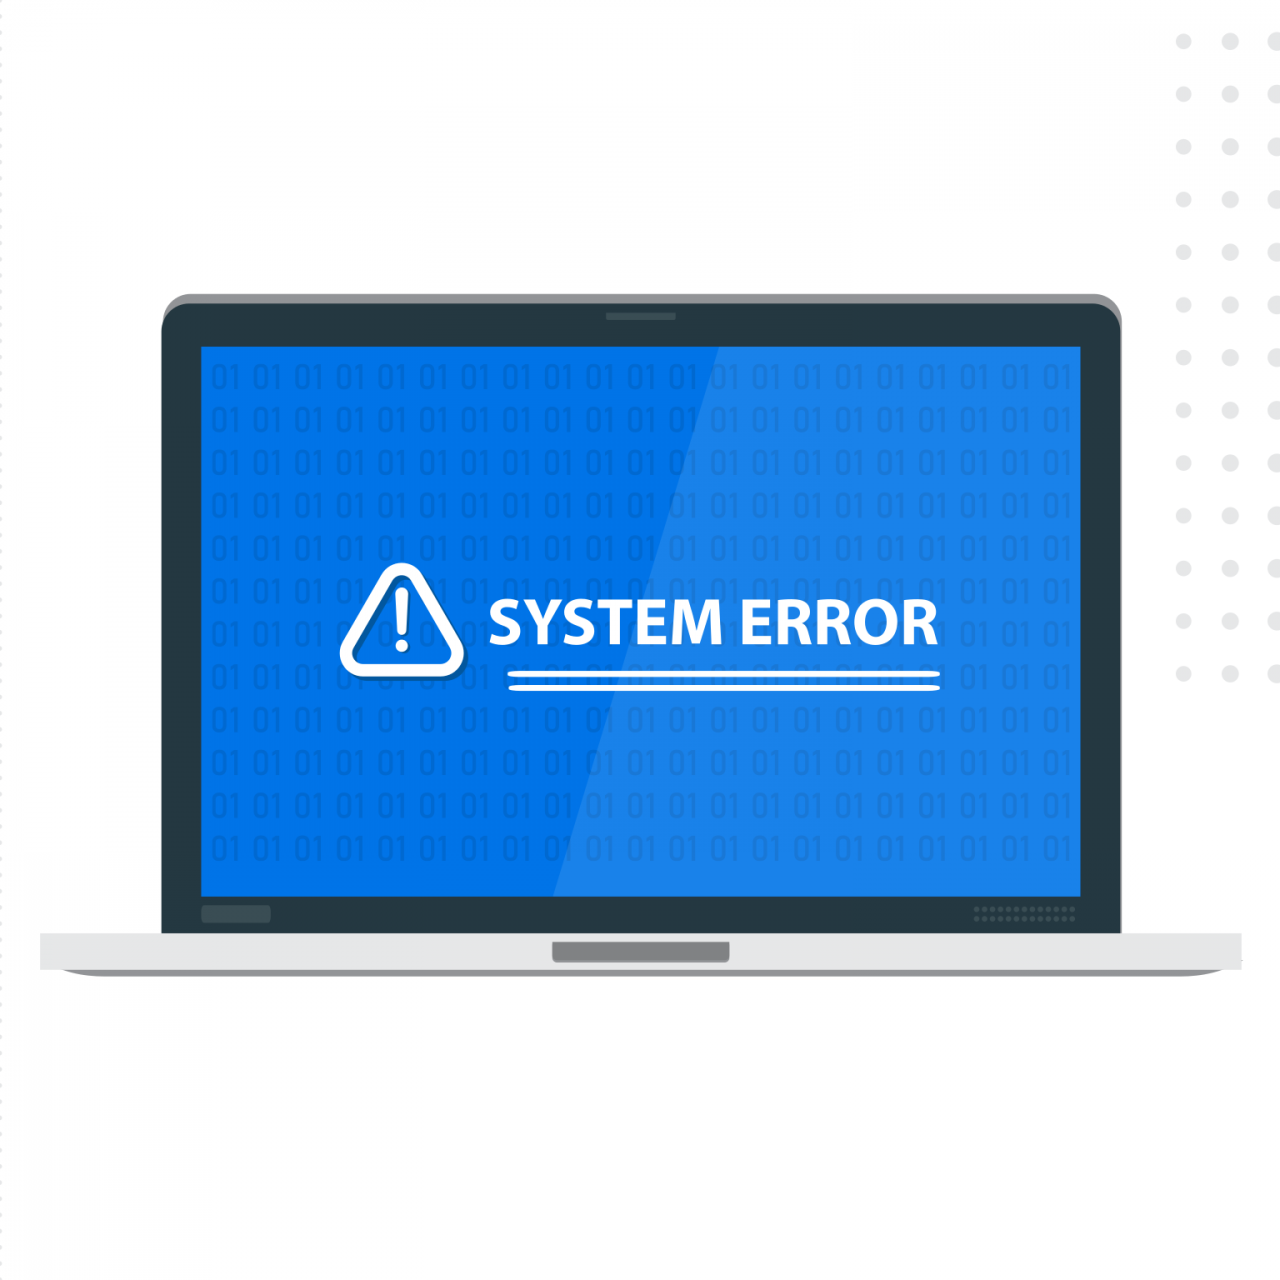 Hardware error! How can we work now?